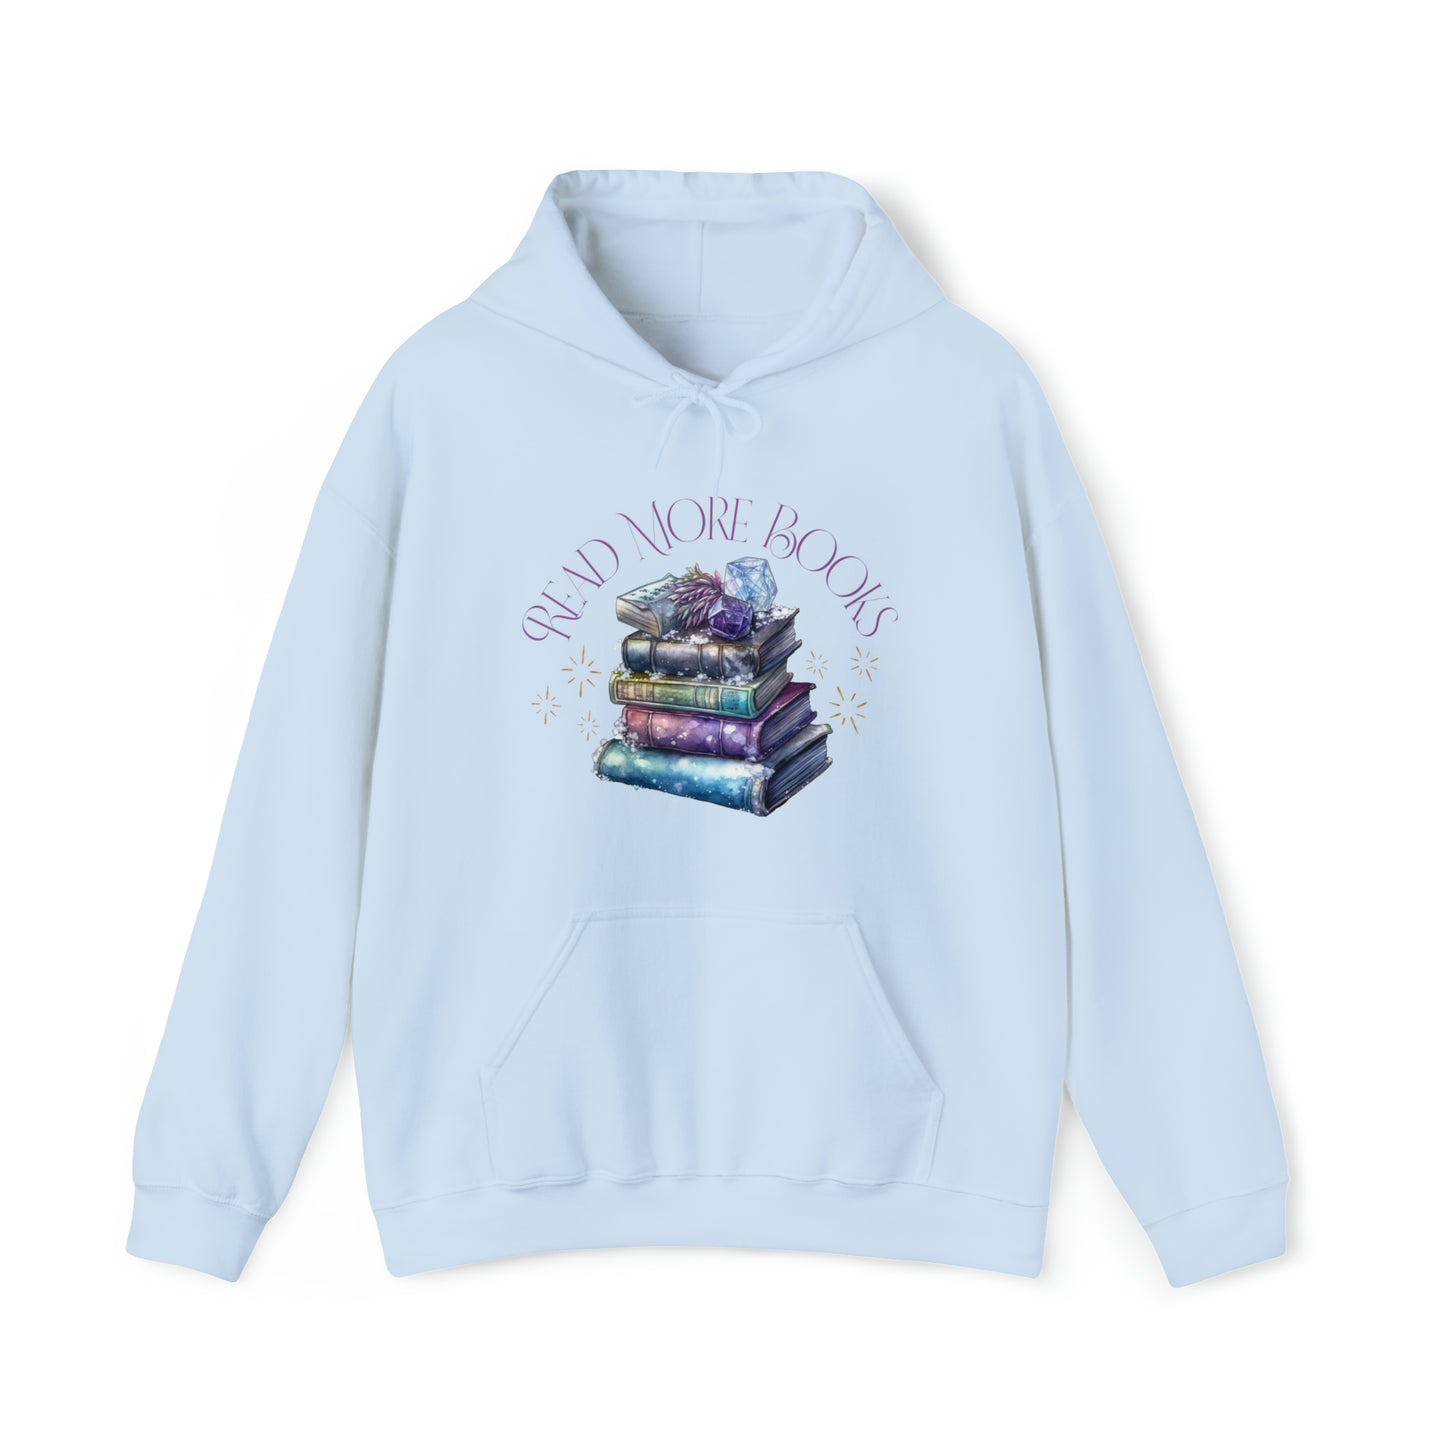 Read More Books Hooded Sweatshirt